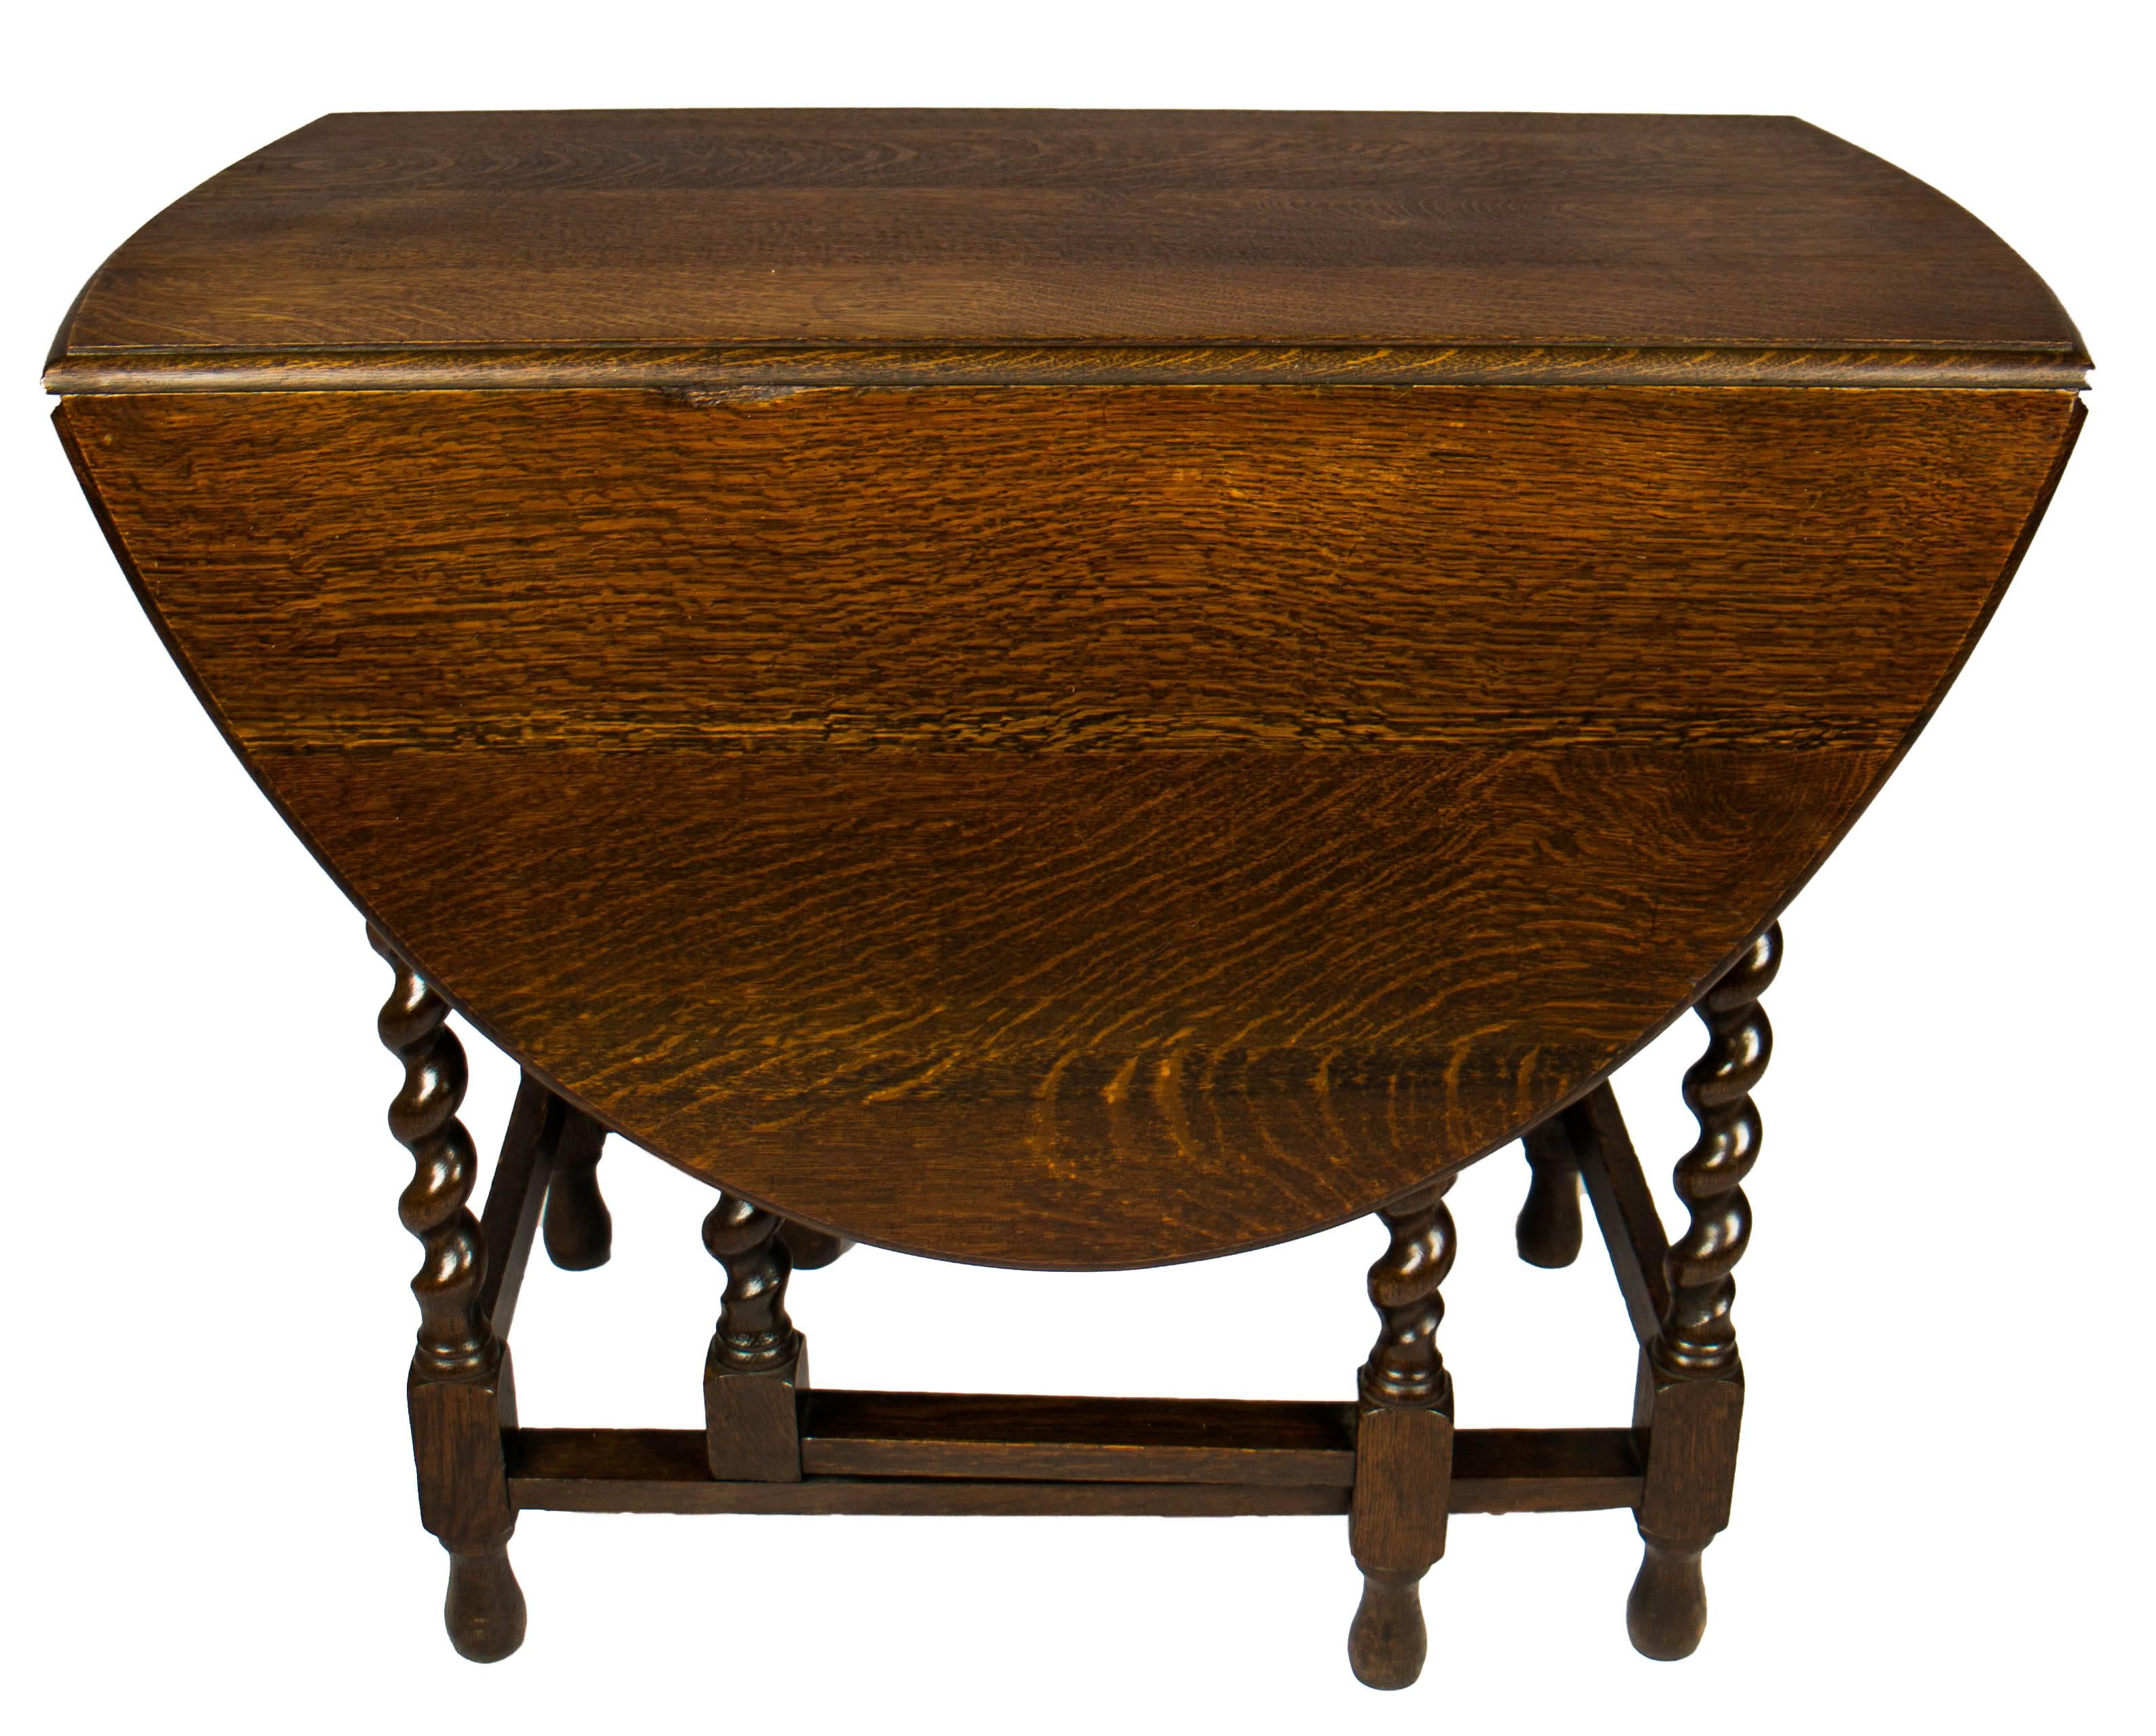 Early 19th century oak, barely twist gateleg table, English, circa 1900. 

Closed:
36